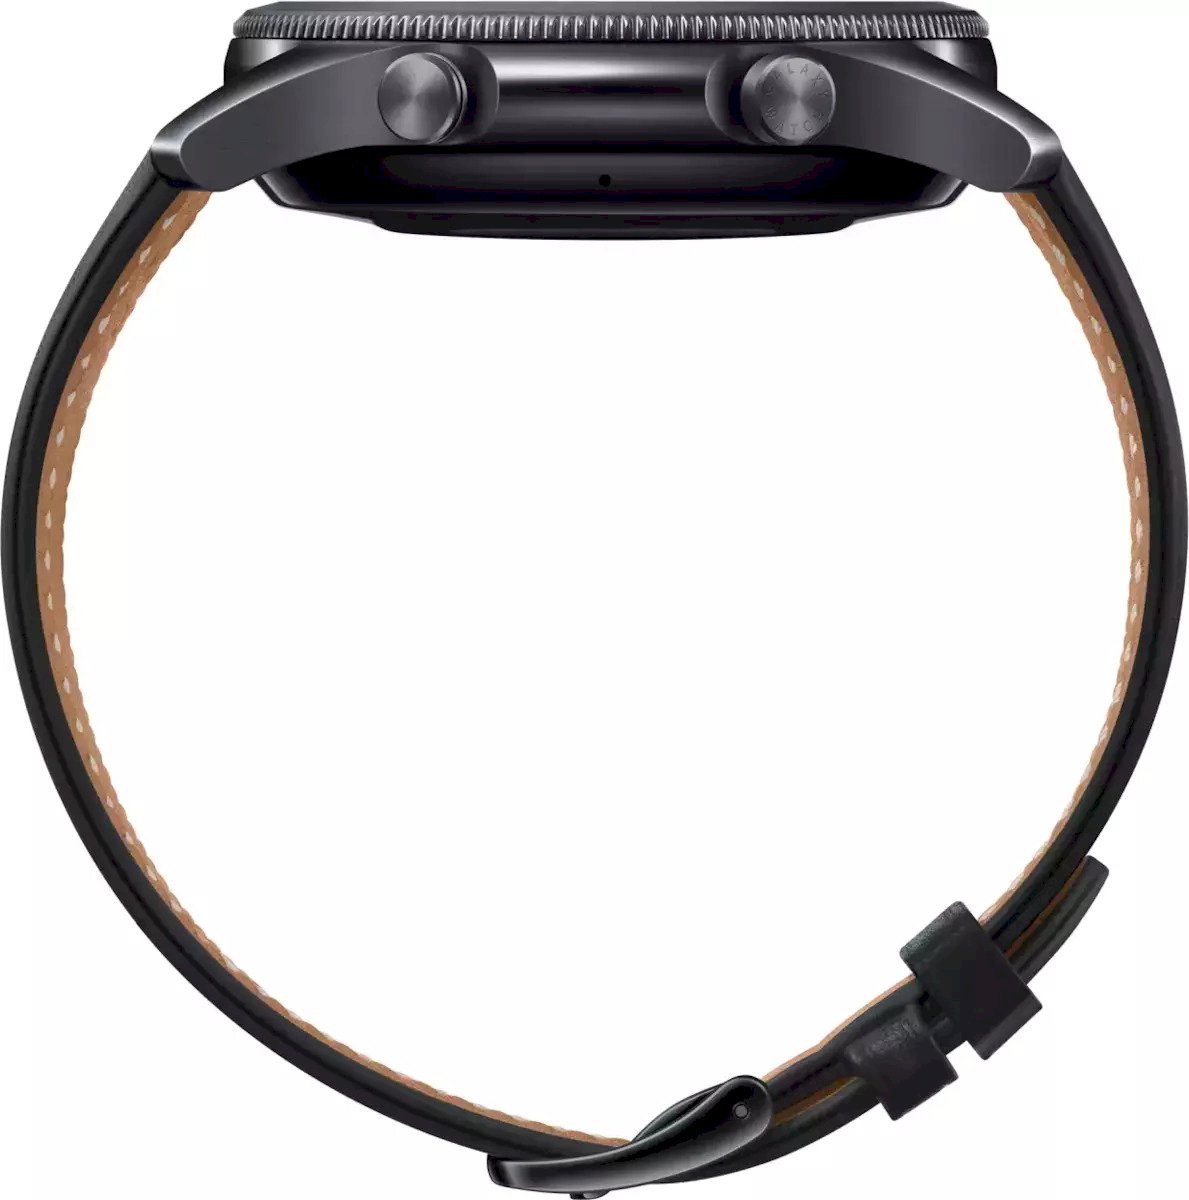 Galaxy Watch3 Stainless Steel 45mm (Mystic Black)SM-R840NZK